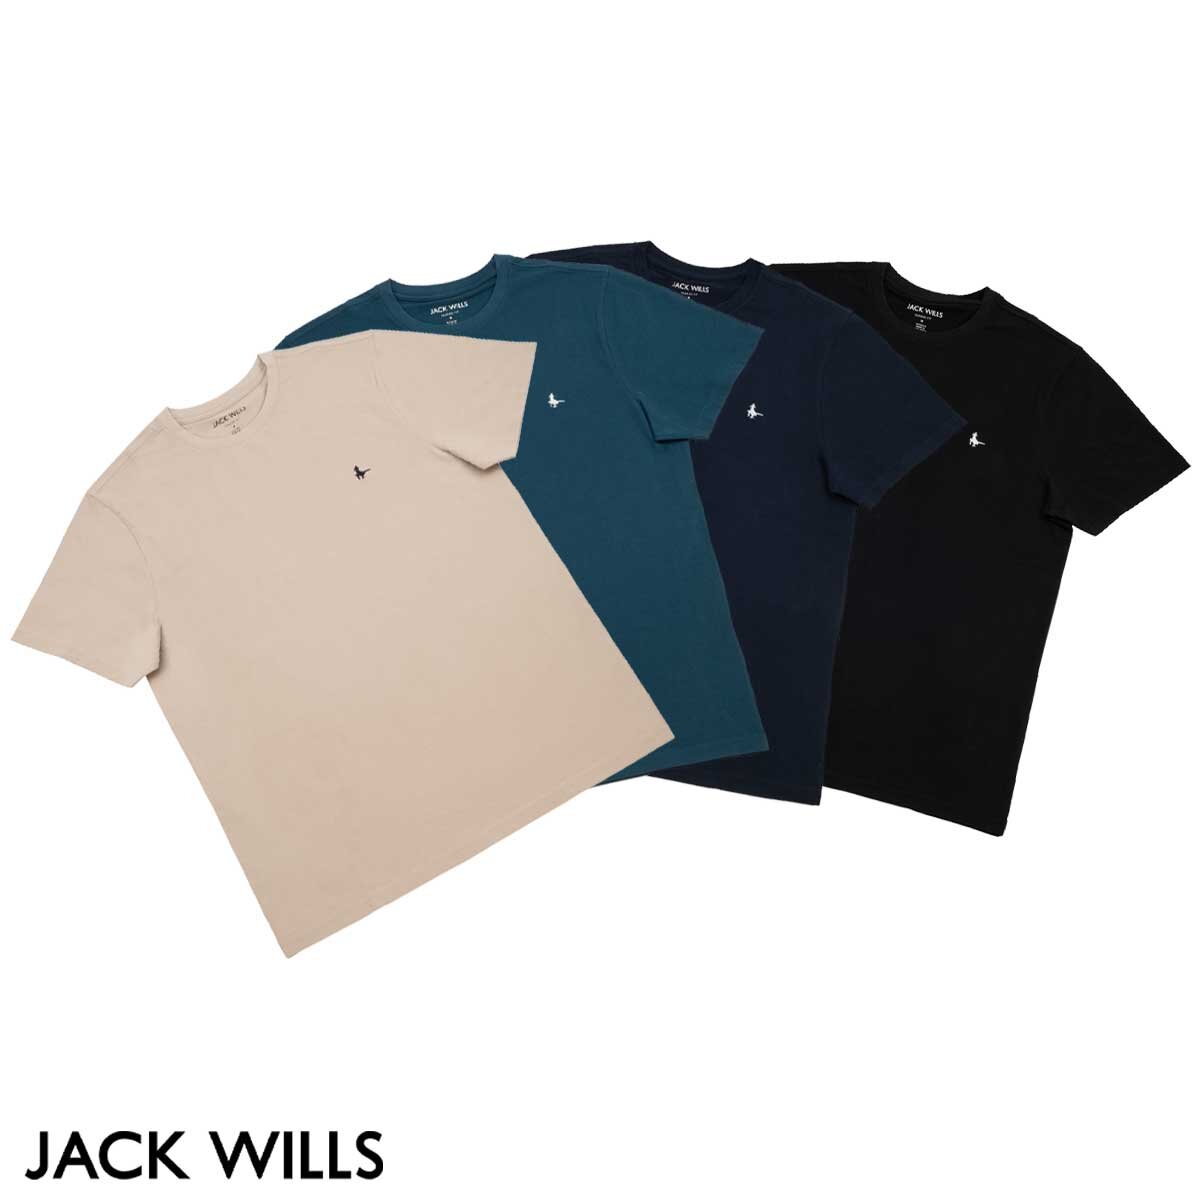 Jack Wills Men's Sandleford T-Shirt in 4 Colours & 4 Sizes